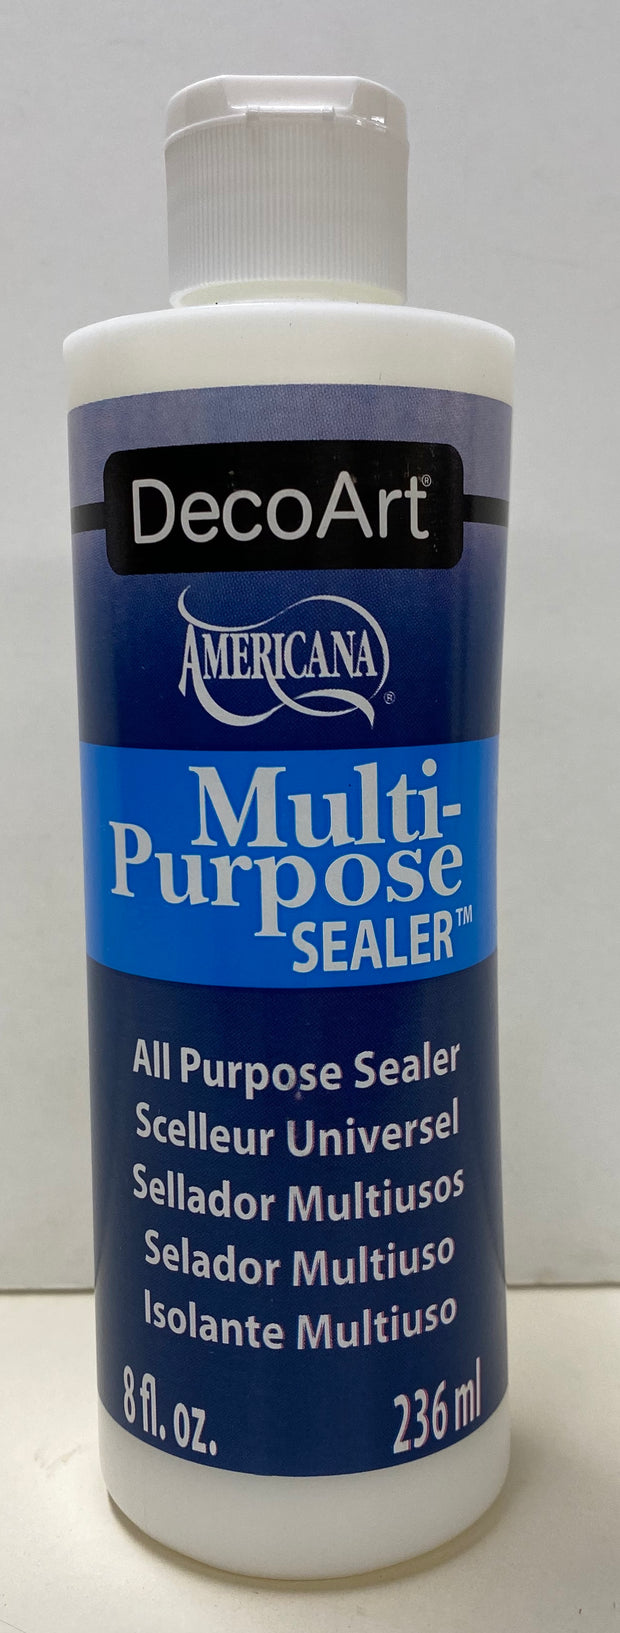 8 Oz Multi-Purpose Sealer